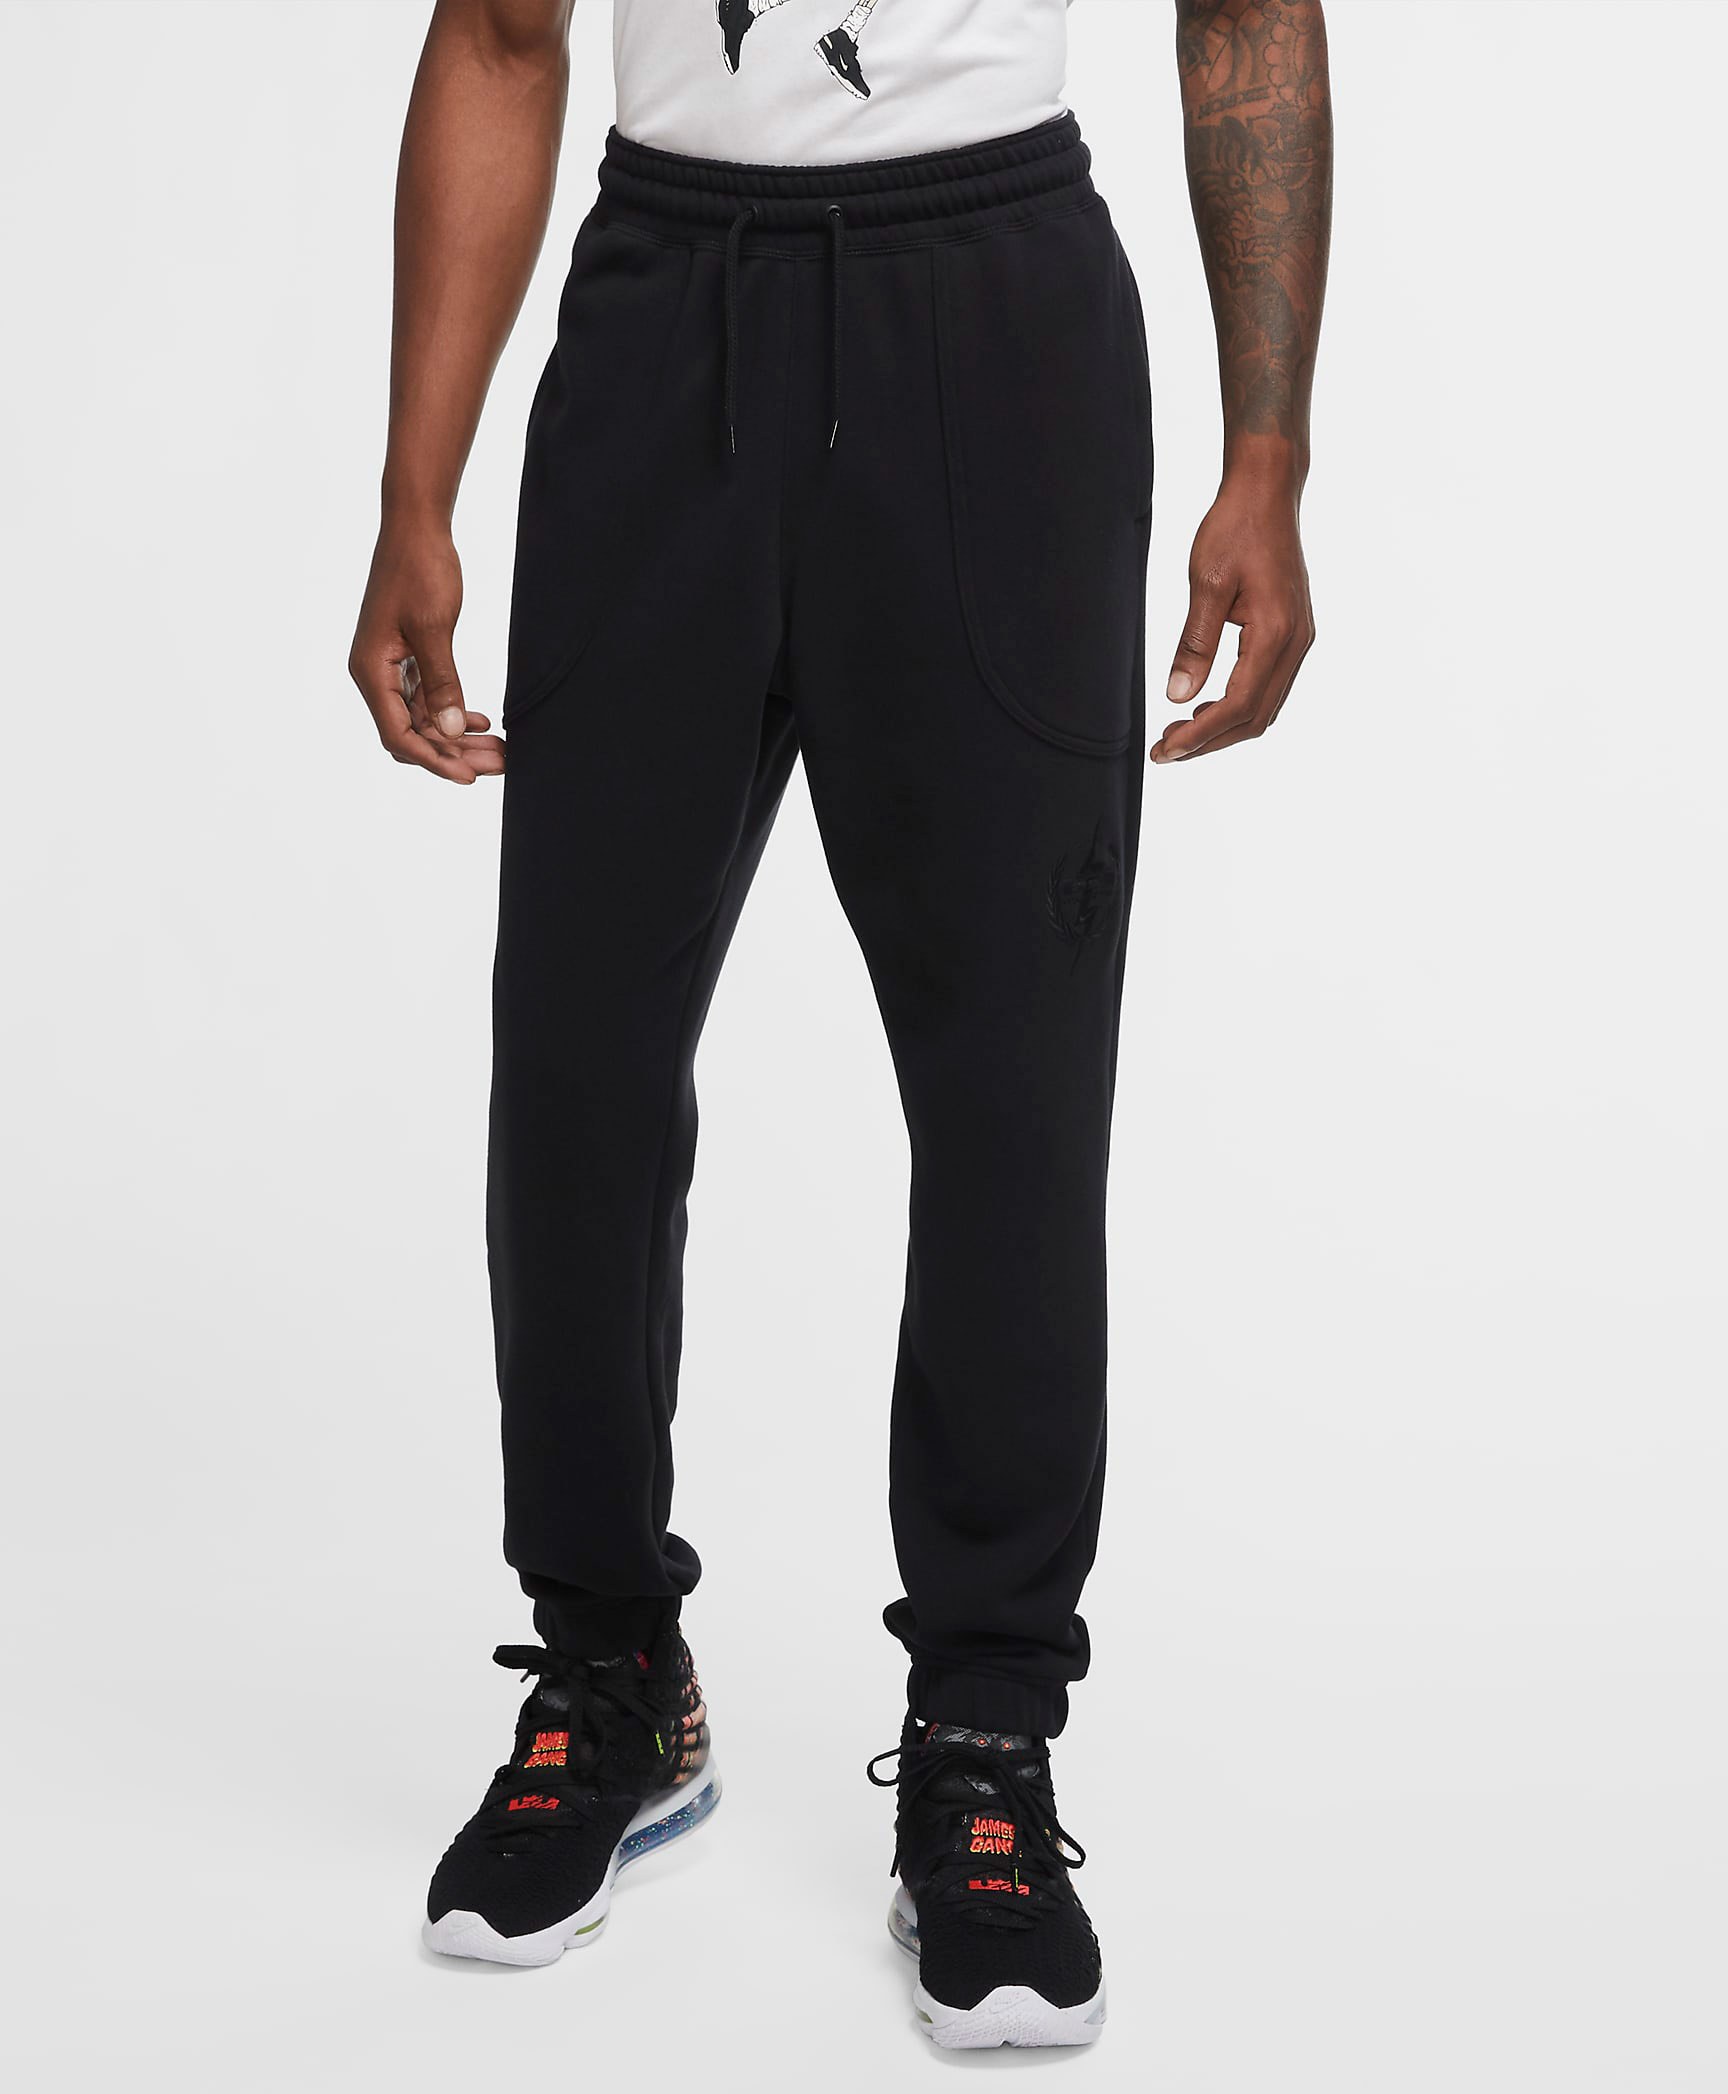 Nike LeBron 18 James Gang Shirts Clothing Match | SneakerFits.com